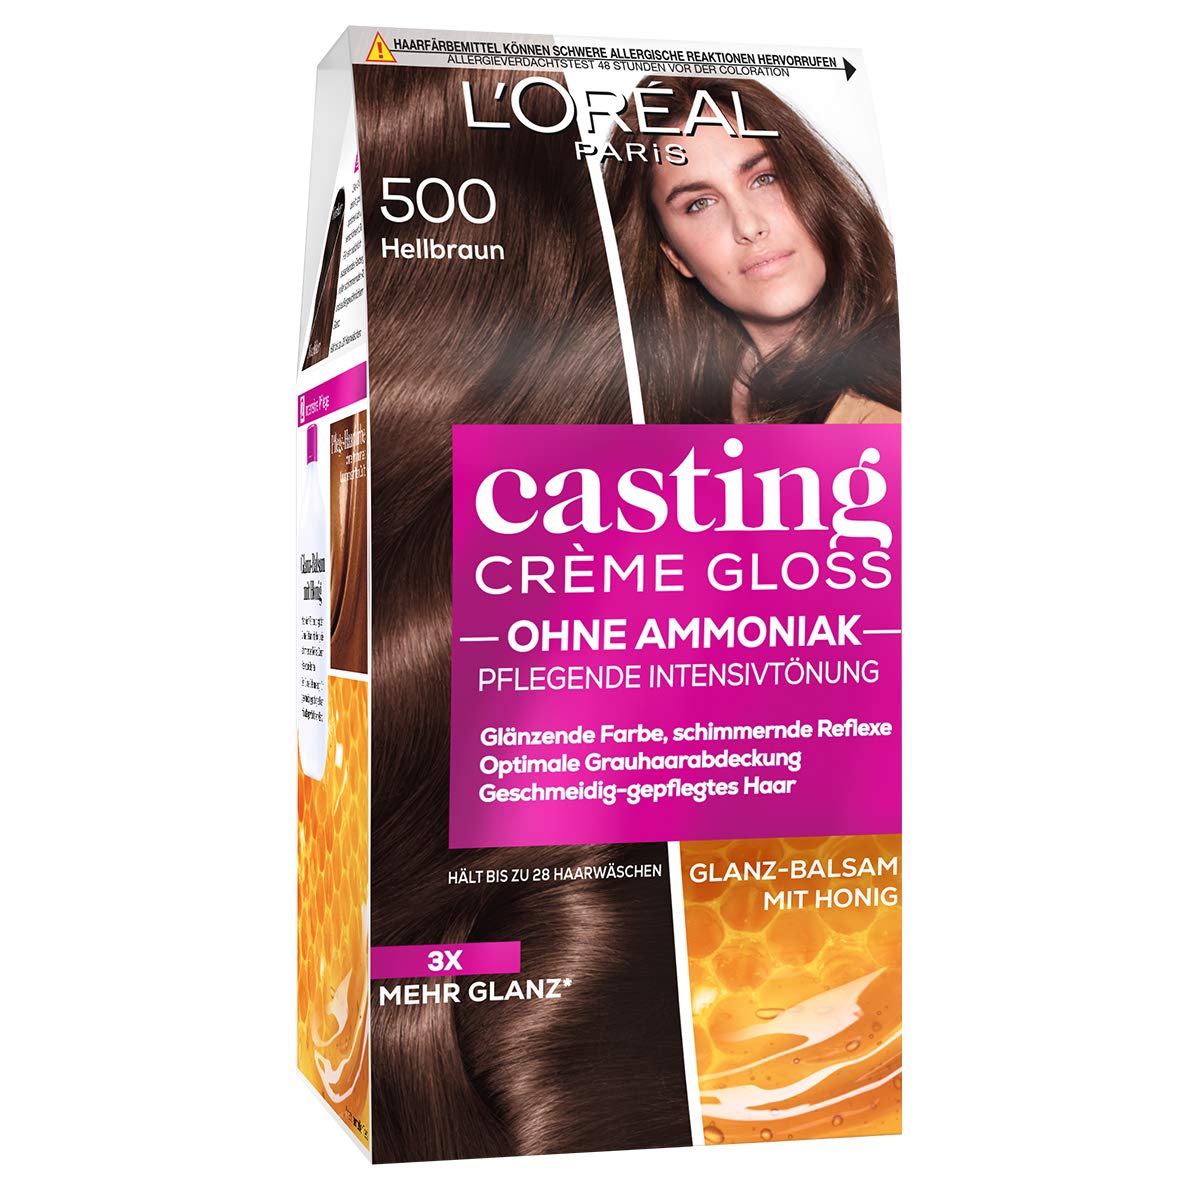 L'Oréal Paris L\'Oréal Paris Casting Crème Gloss Hair Colour, Ammonia-Free and Silicone-Free Nourishing Intensive Hair Colour with Crème Gloss, No. 500 Light Brown (Brown), Pack of 1, ‎500